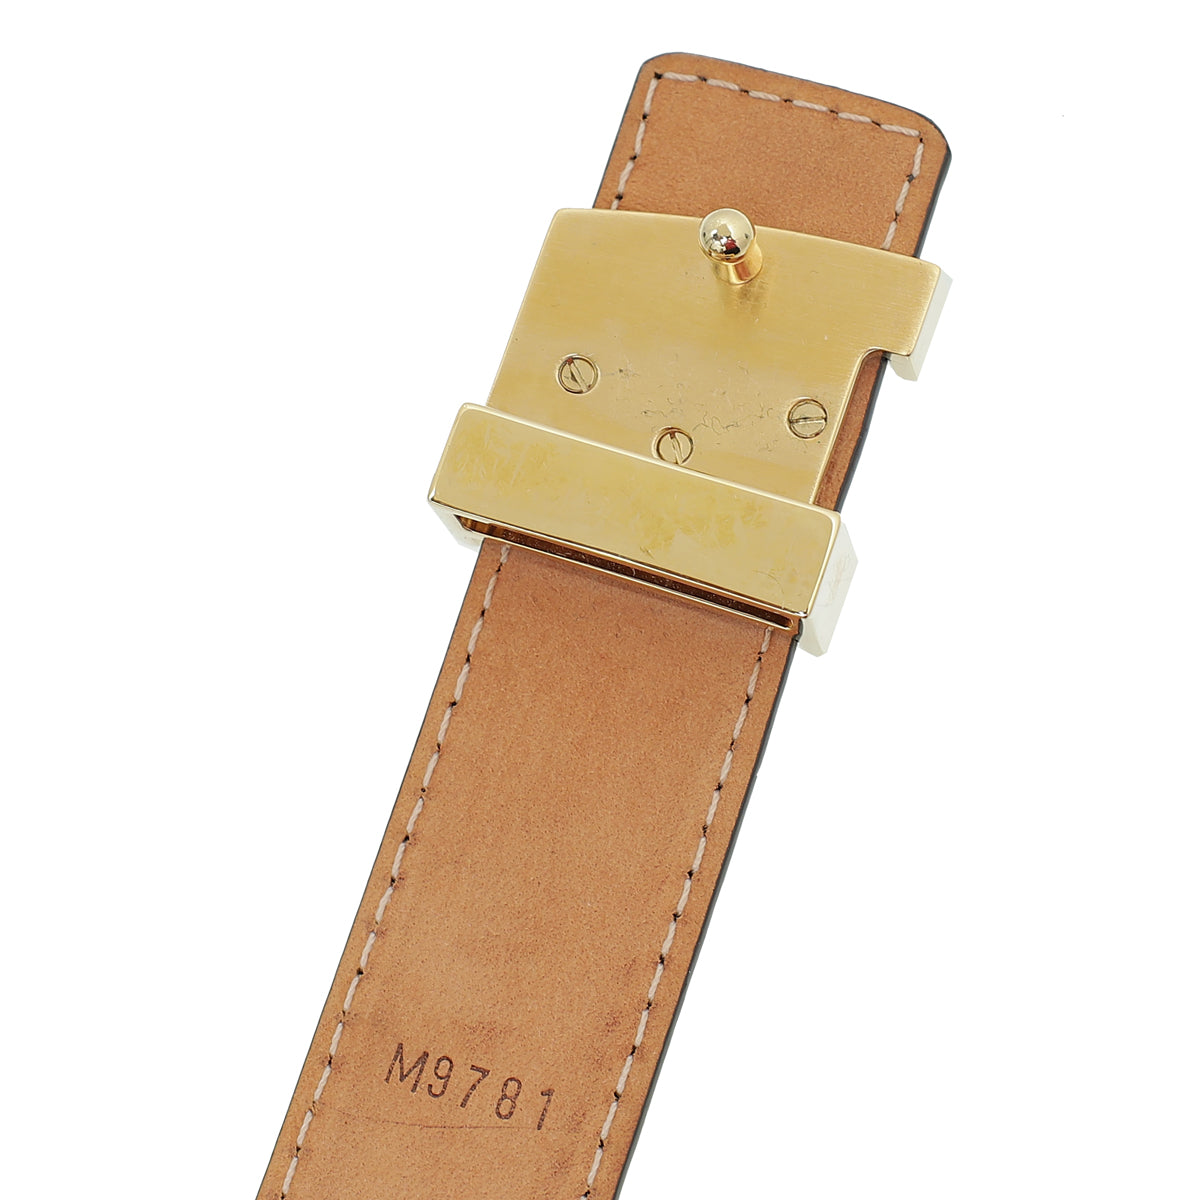 Louis Vuitton Mini Monogram Initial 25mm Belt 30